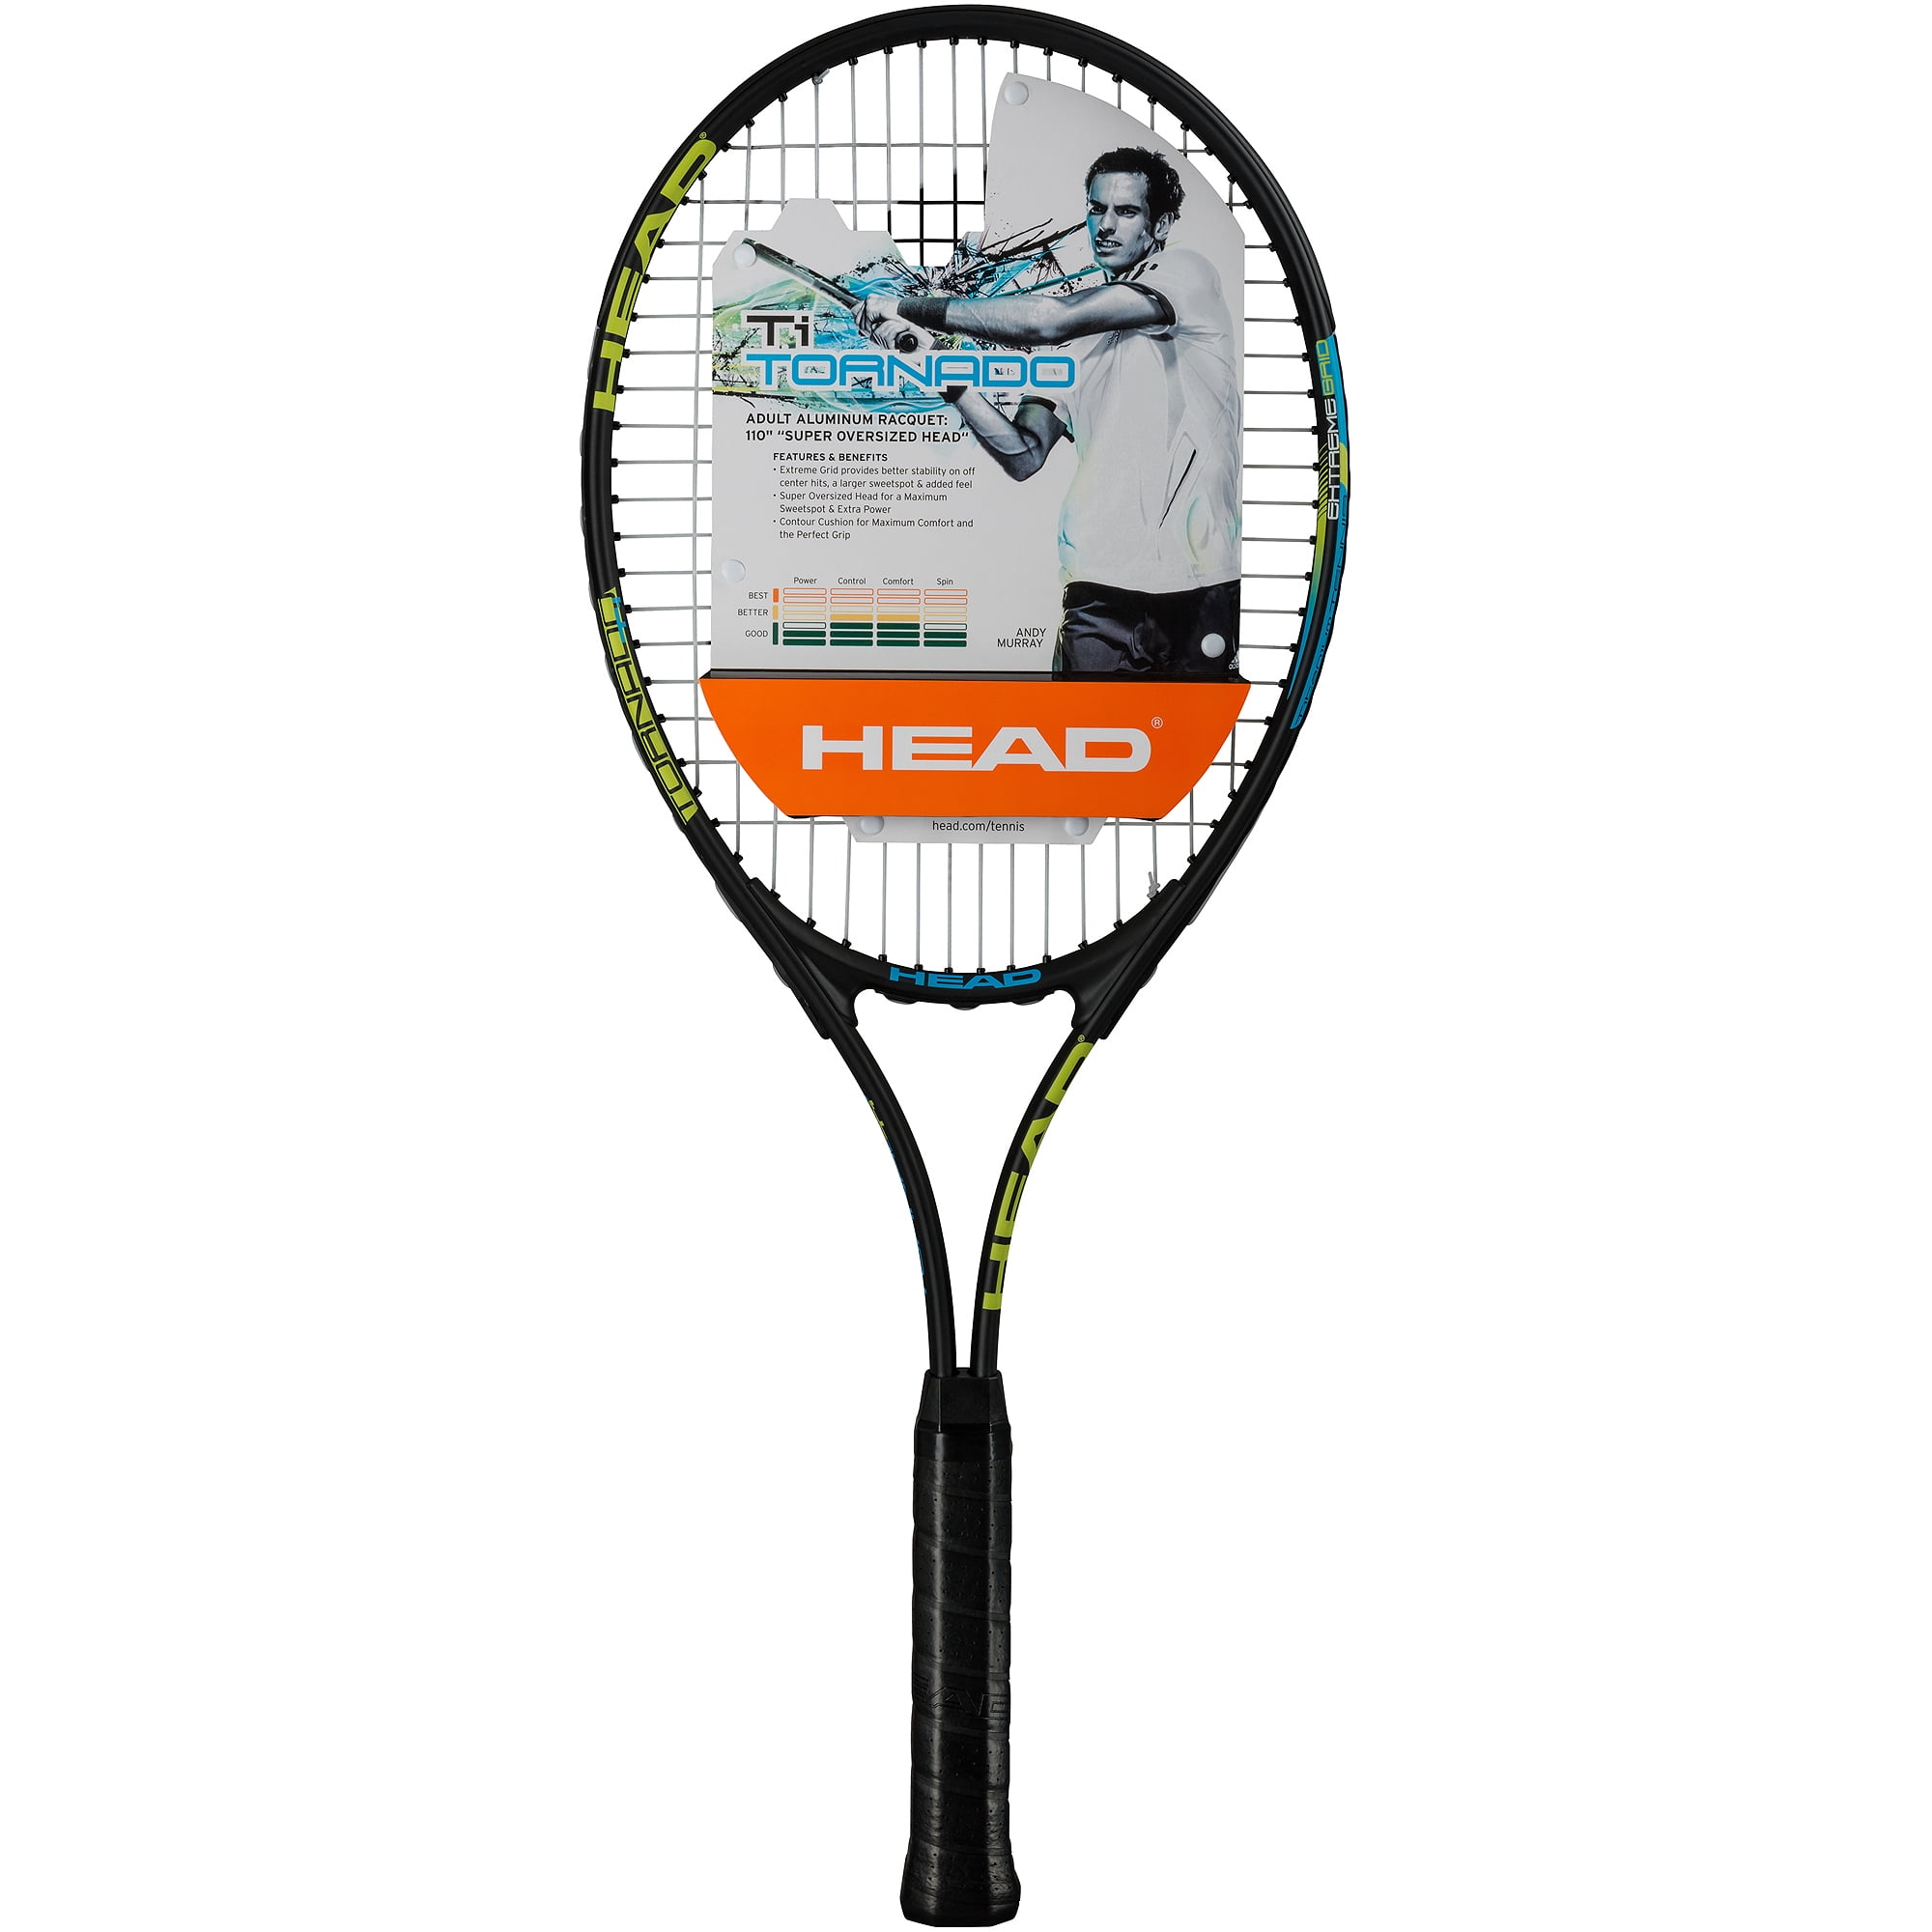 Head 2016 TI Tornado Tennis Racquet 